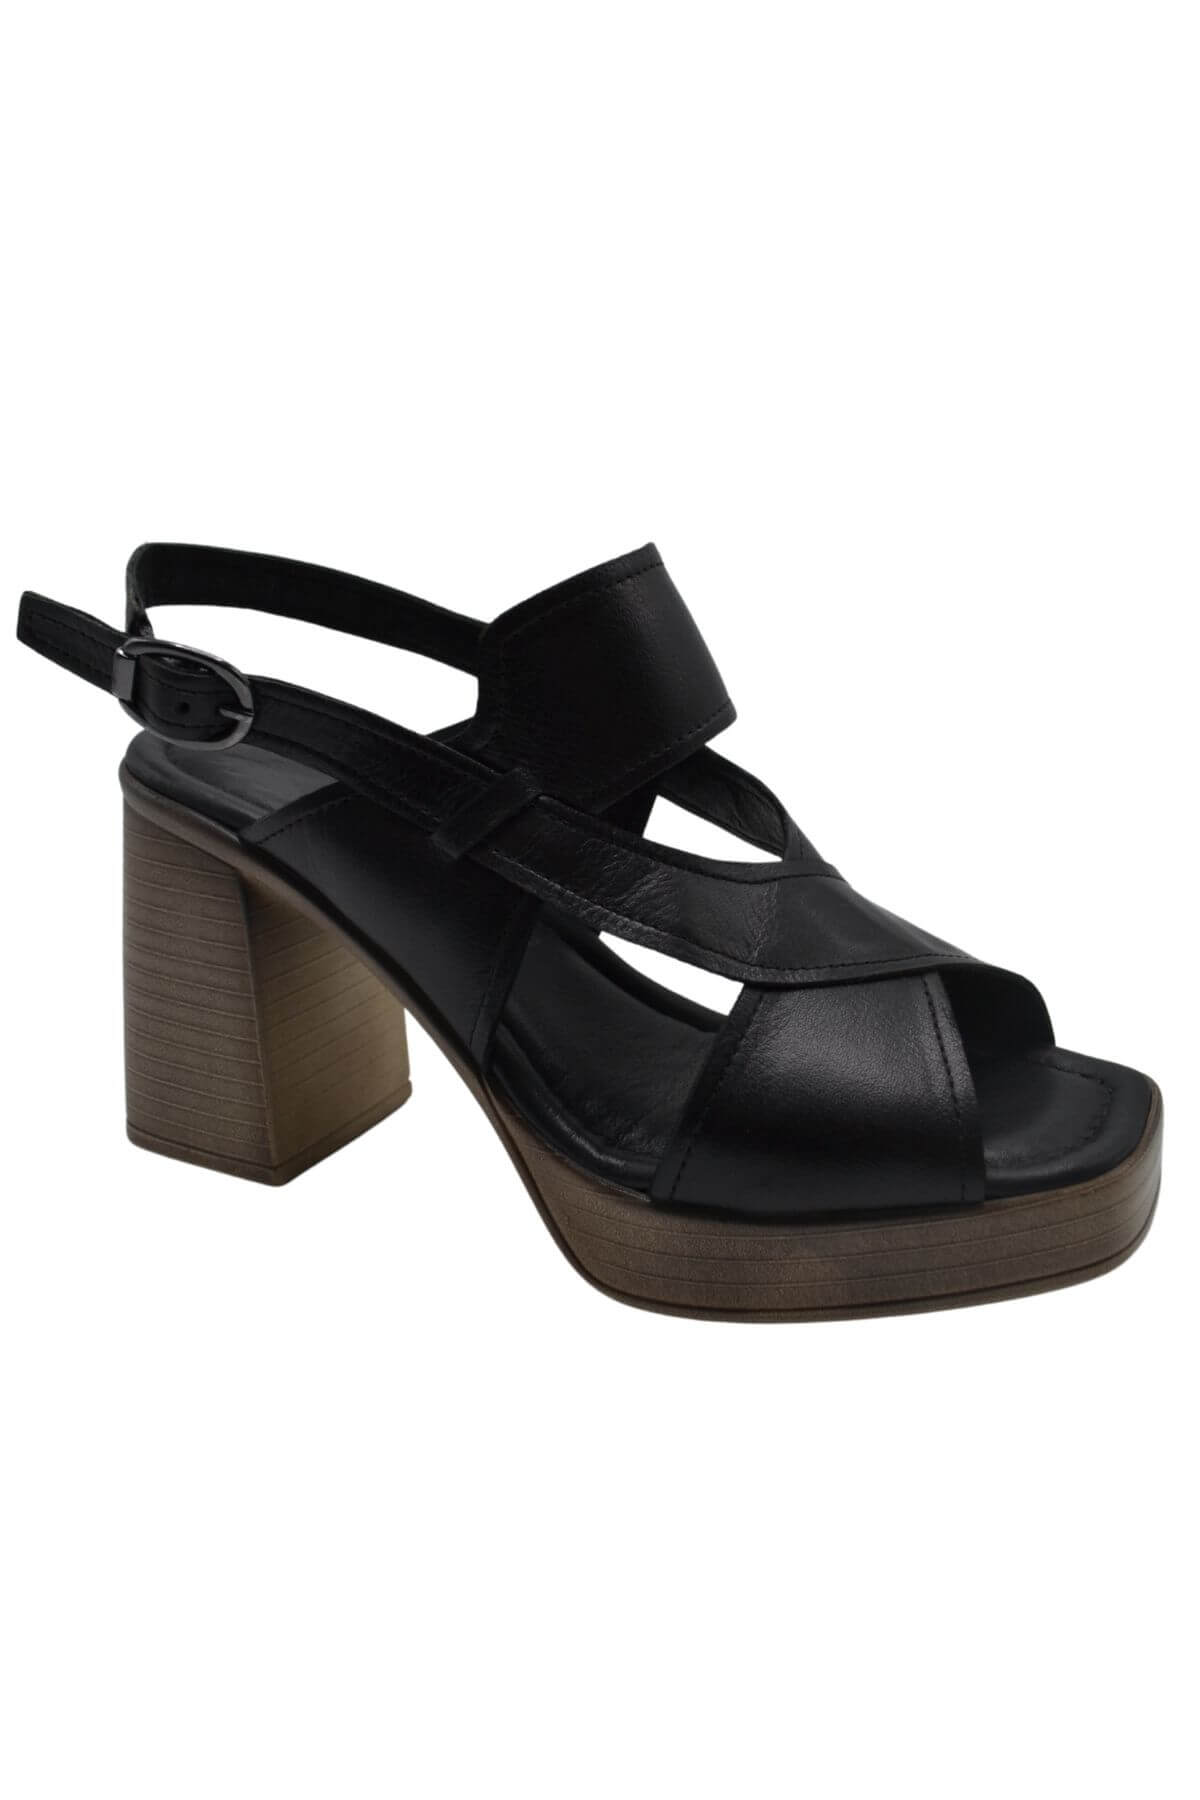 Kadın Topuklu Deri Sandalet Siyah 2313202Y - Thumbnail